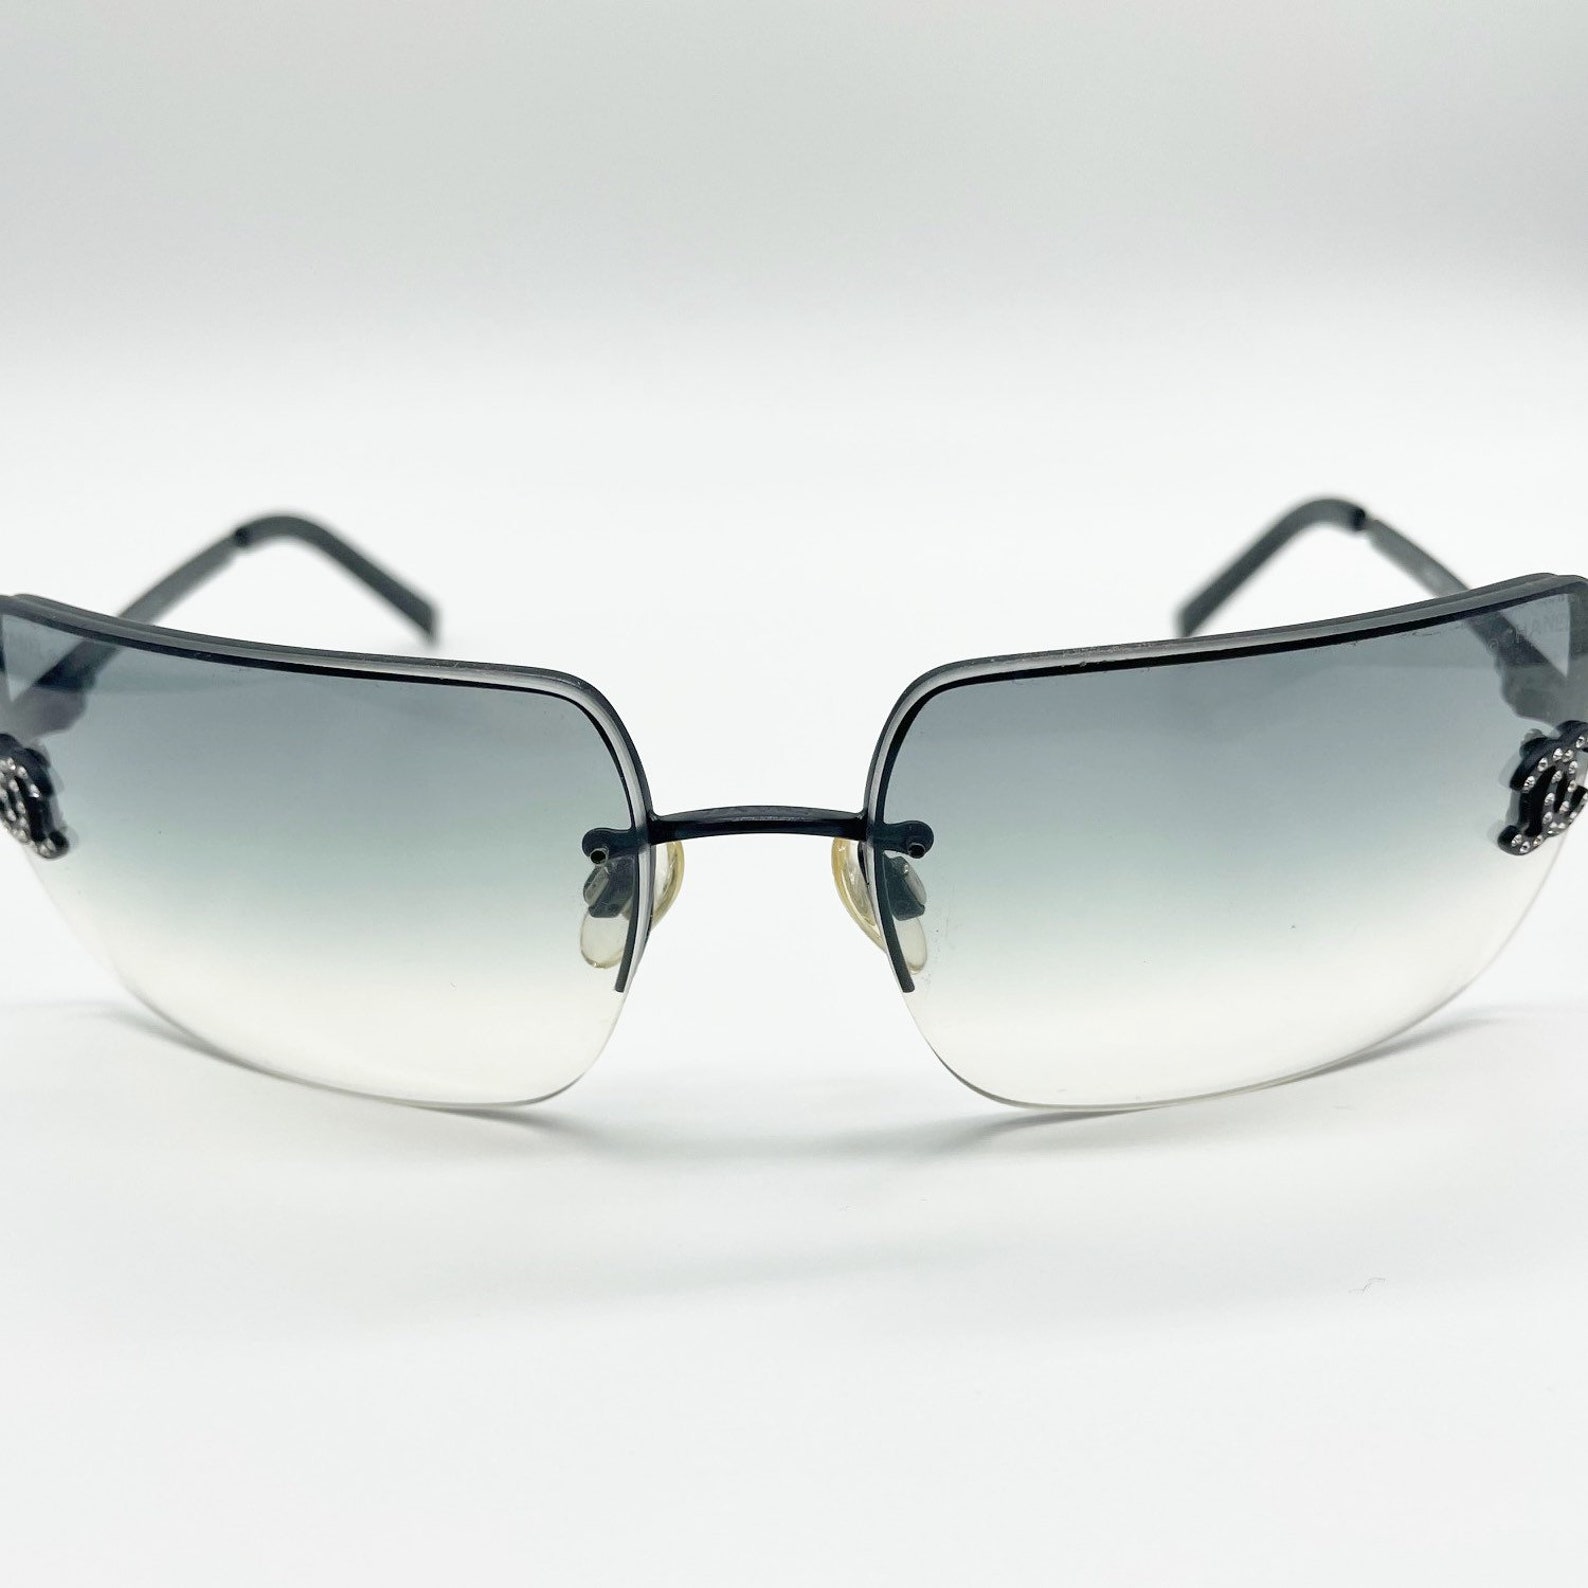 Chanel sunglasses Authentic Chanel Rimless Ombré Gradient | Etsy